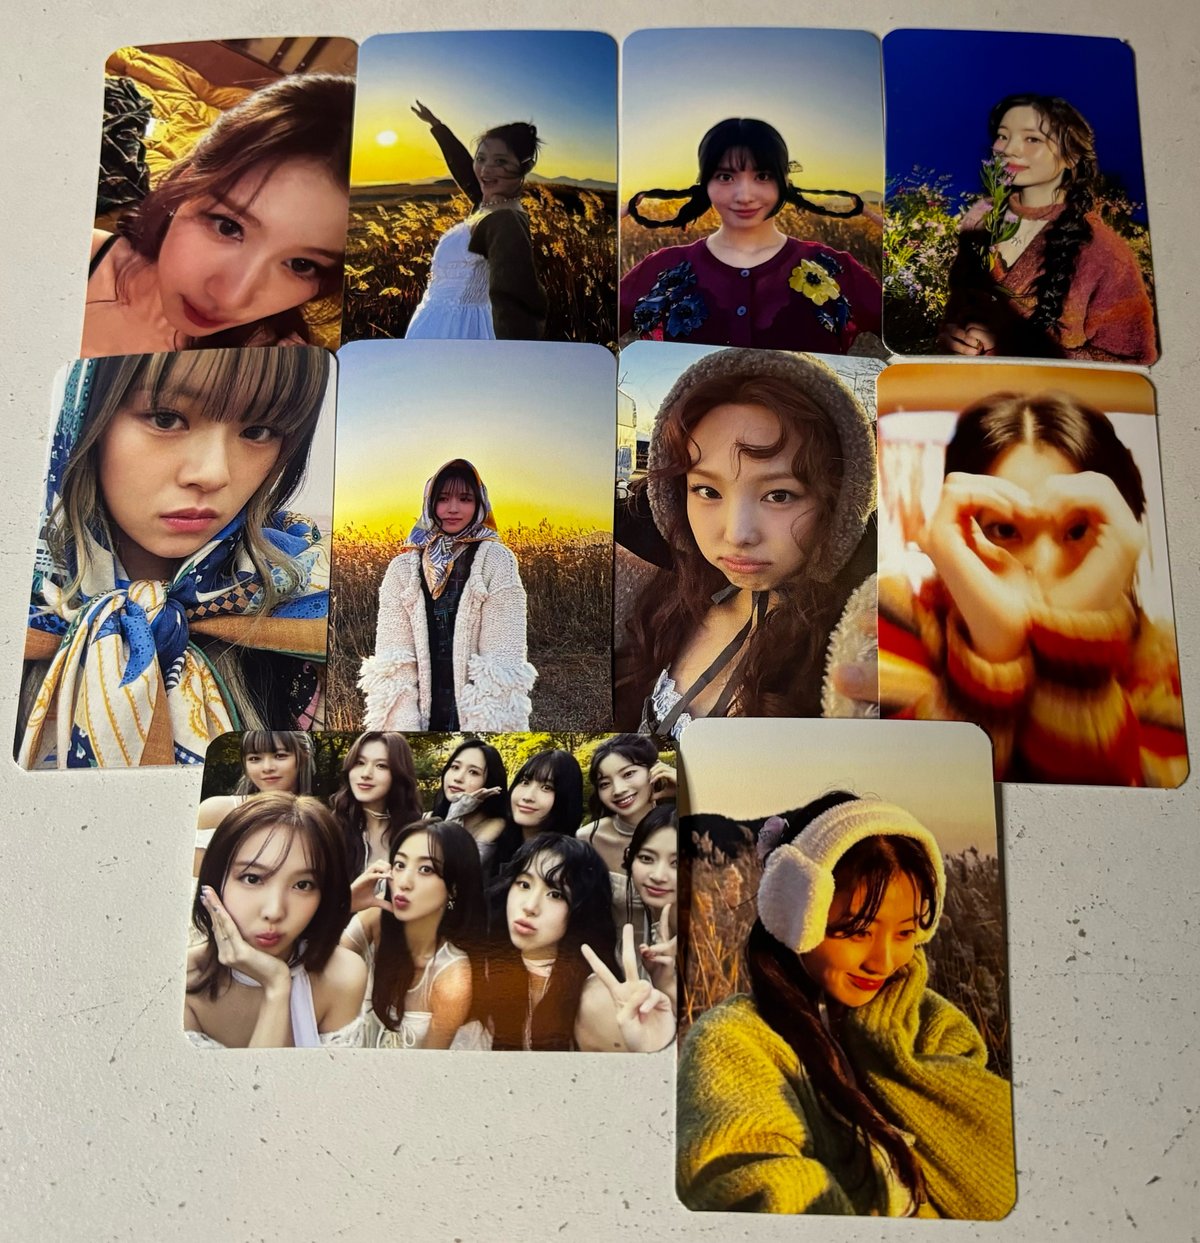 Image of Twice "I Got You" Photocards